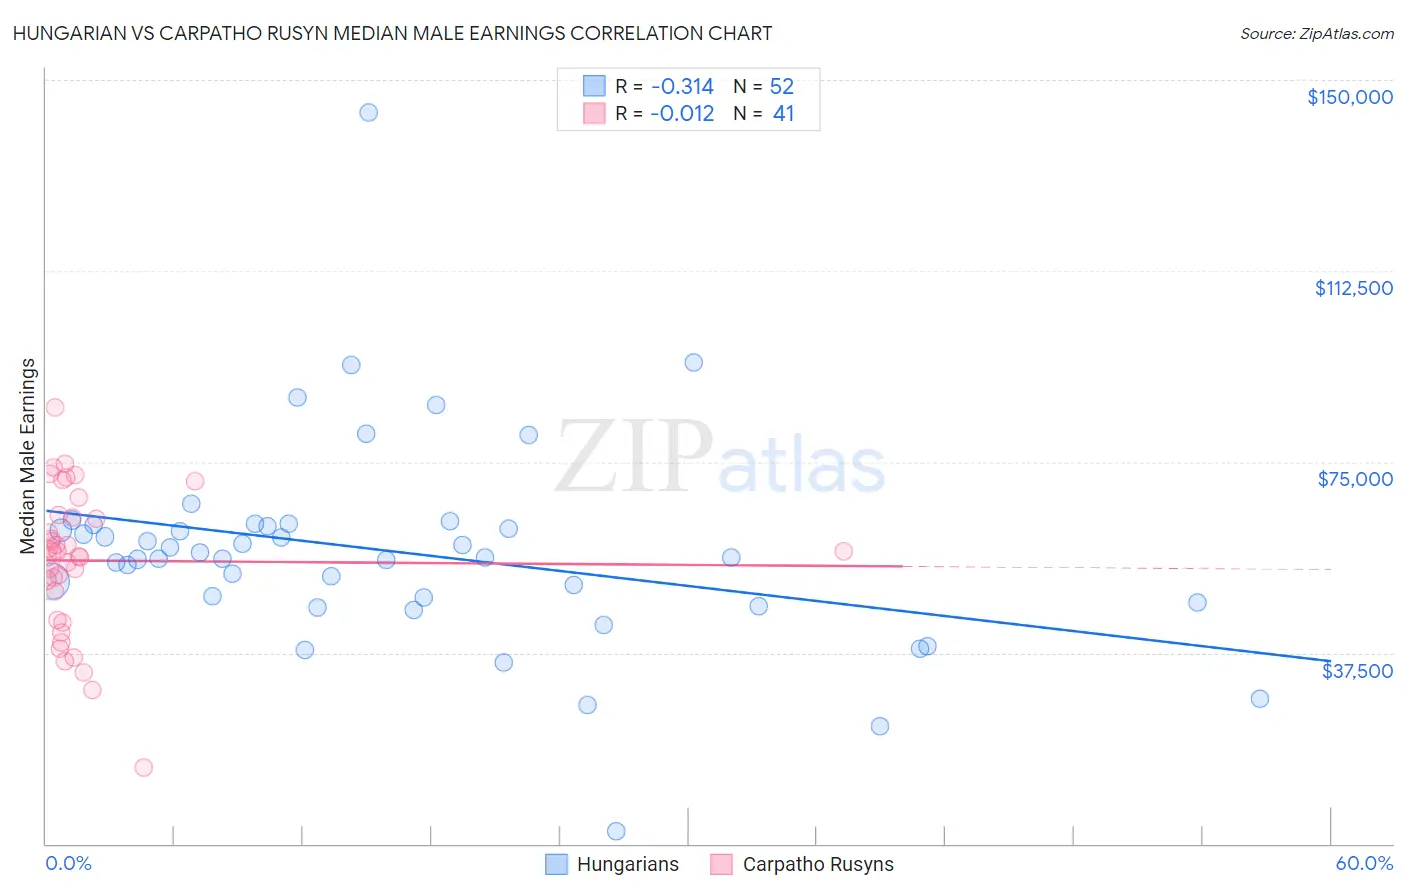 Hungarian vs Carpatho Rusyn Median Male Earnings